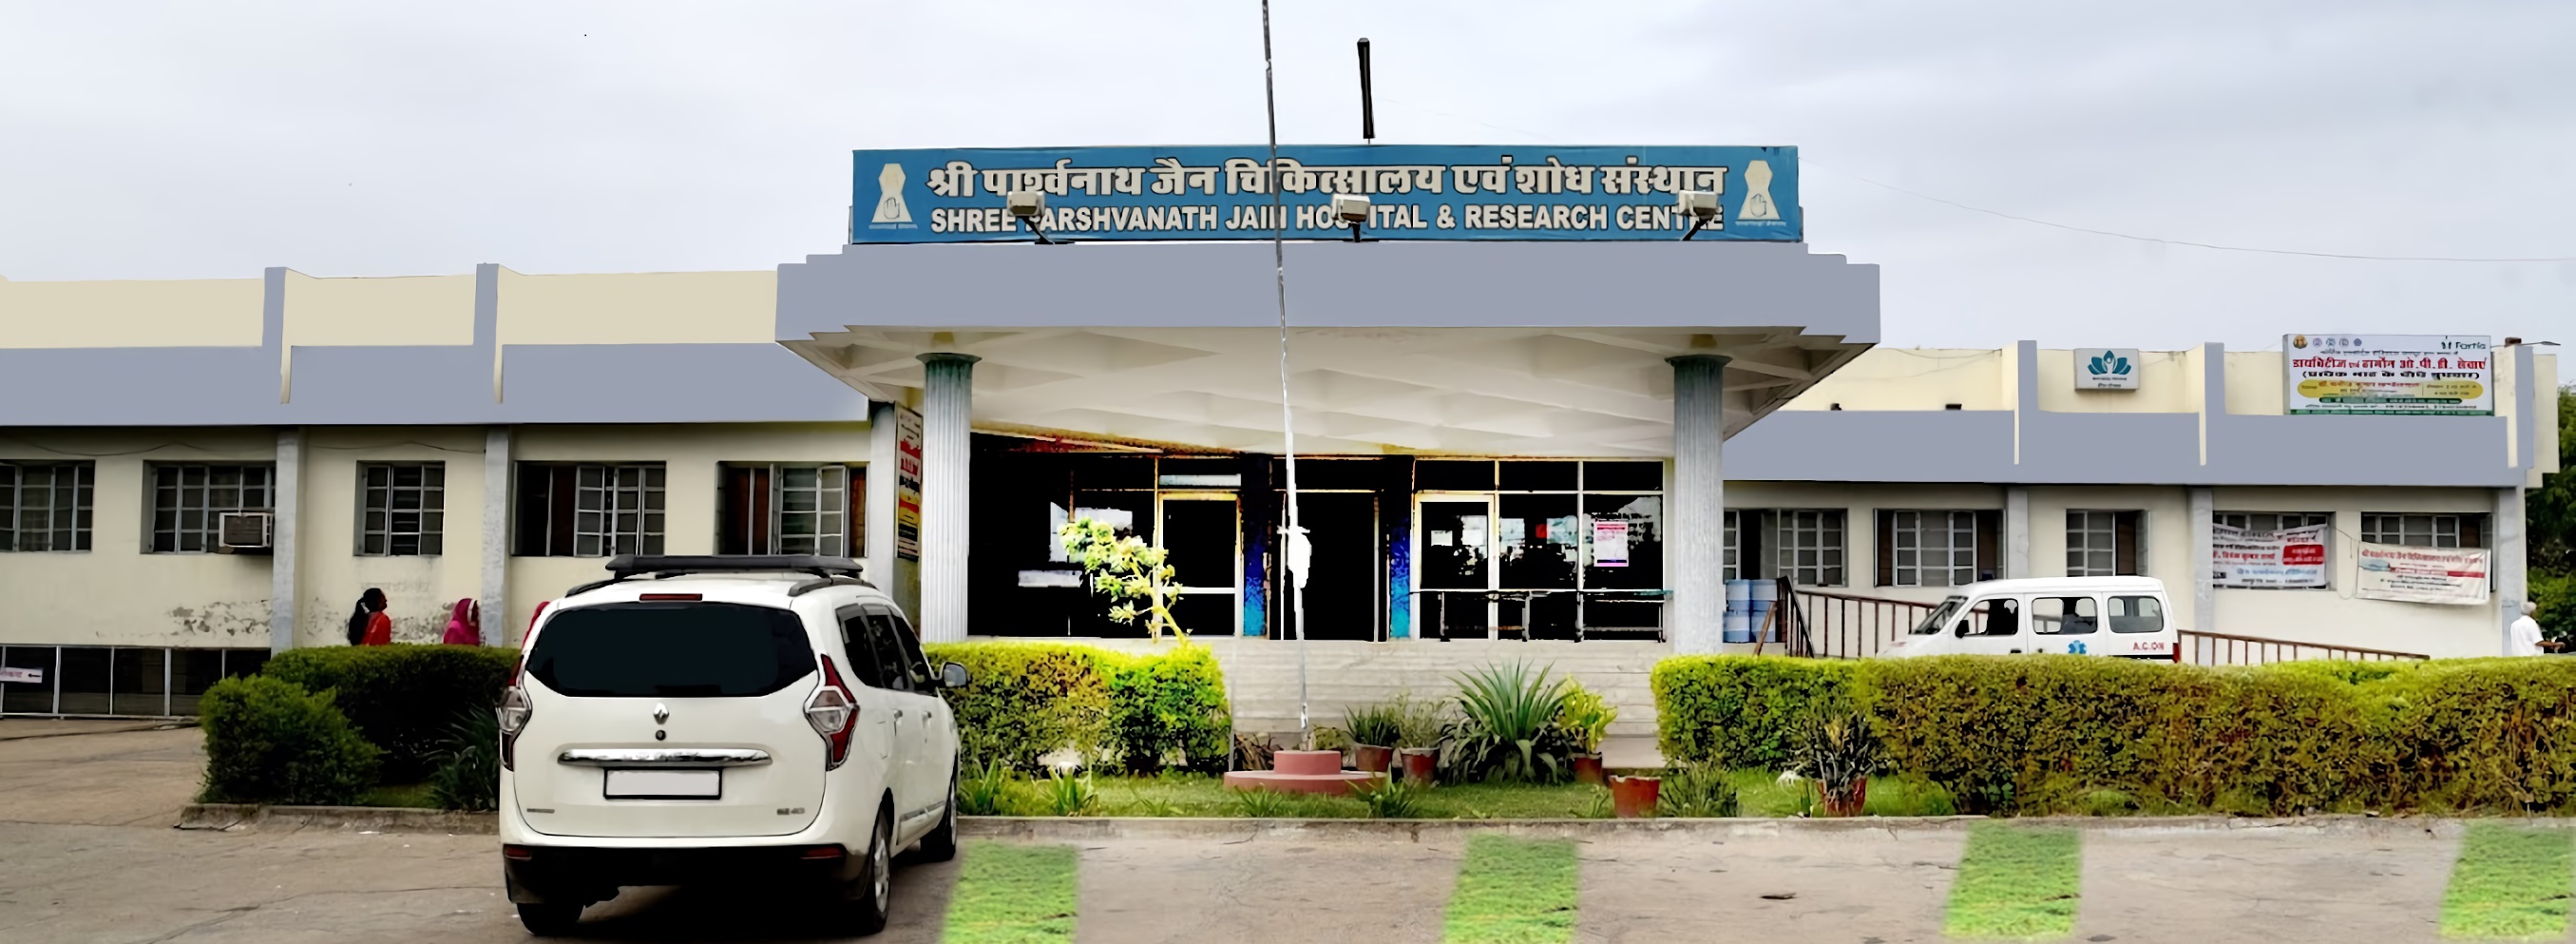 Shree Parshvanath Jain Hospital And Research Center